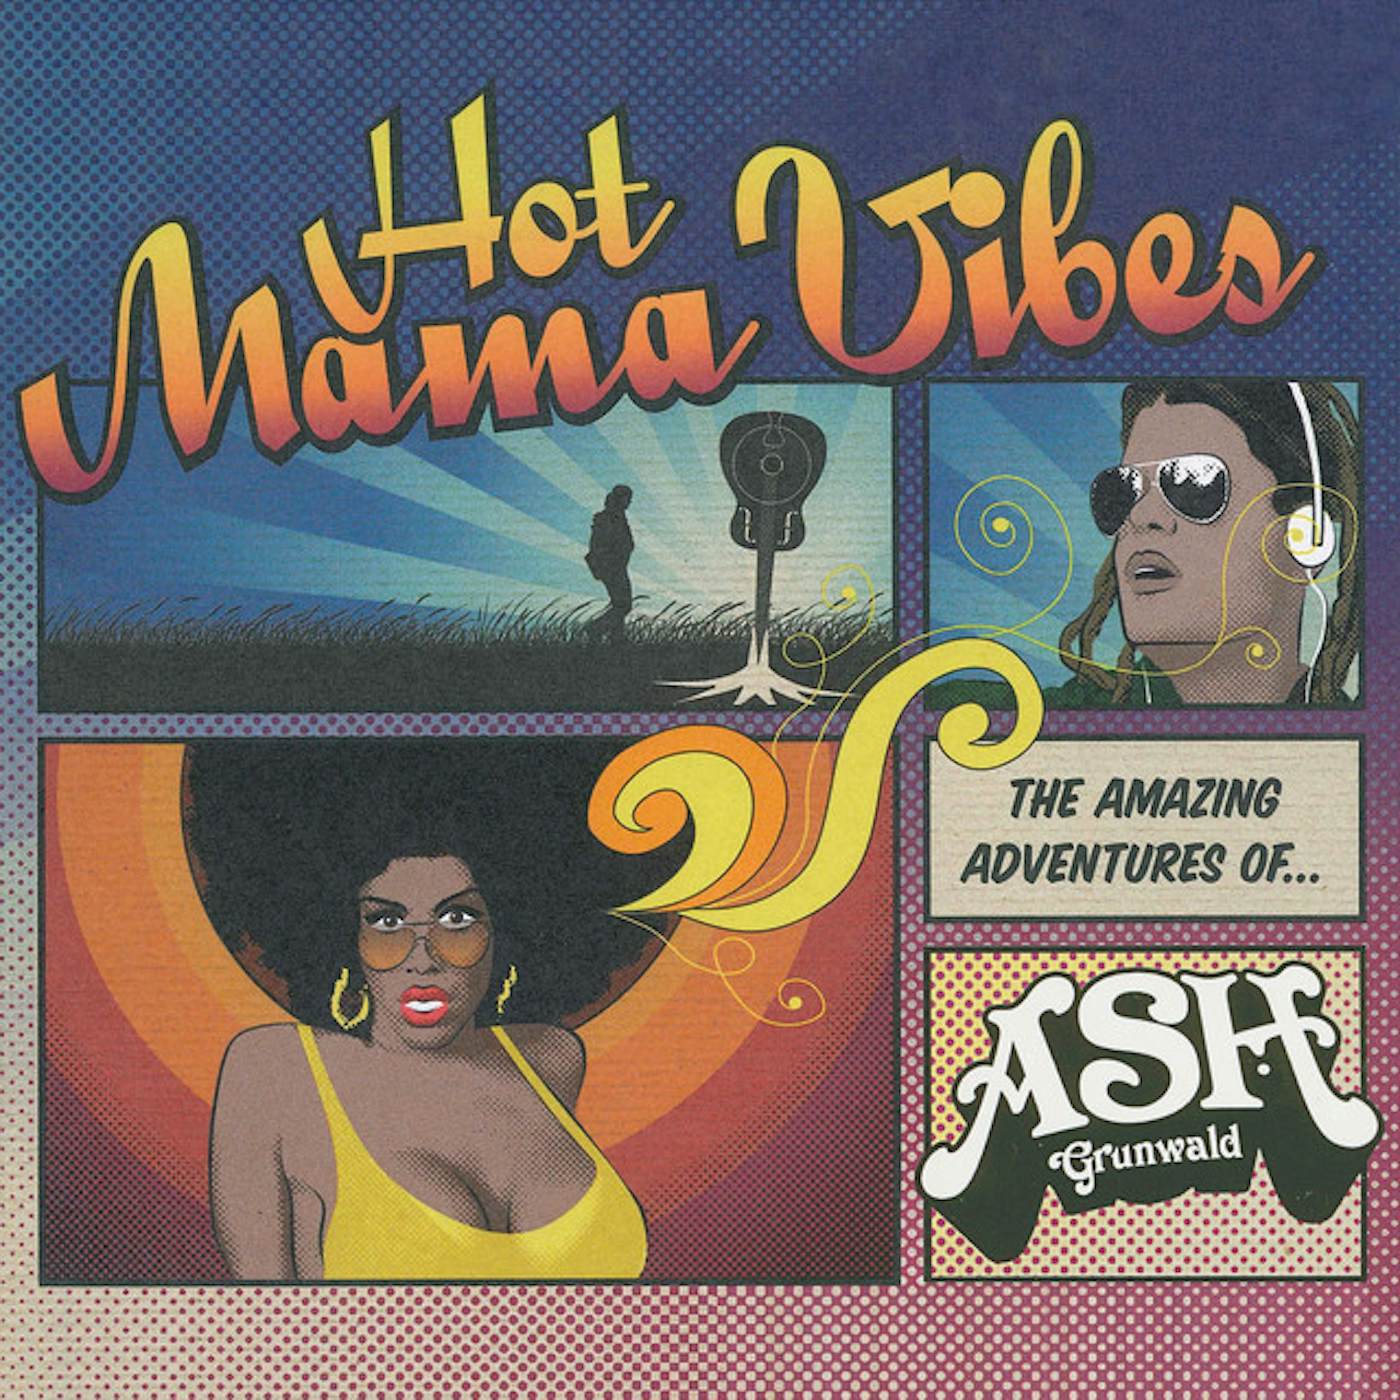 Ash Grunwald Hot Mama Vibes Vinyl Record